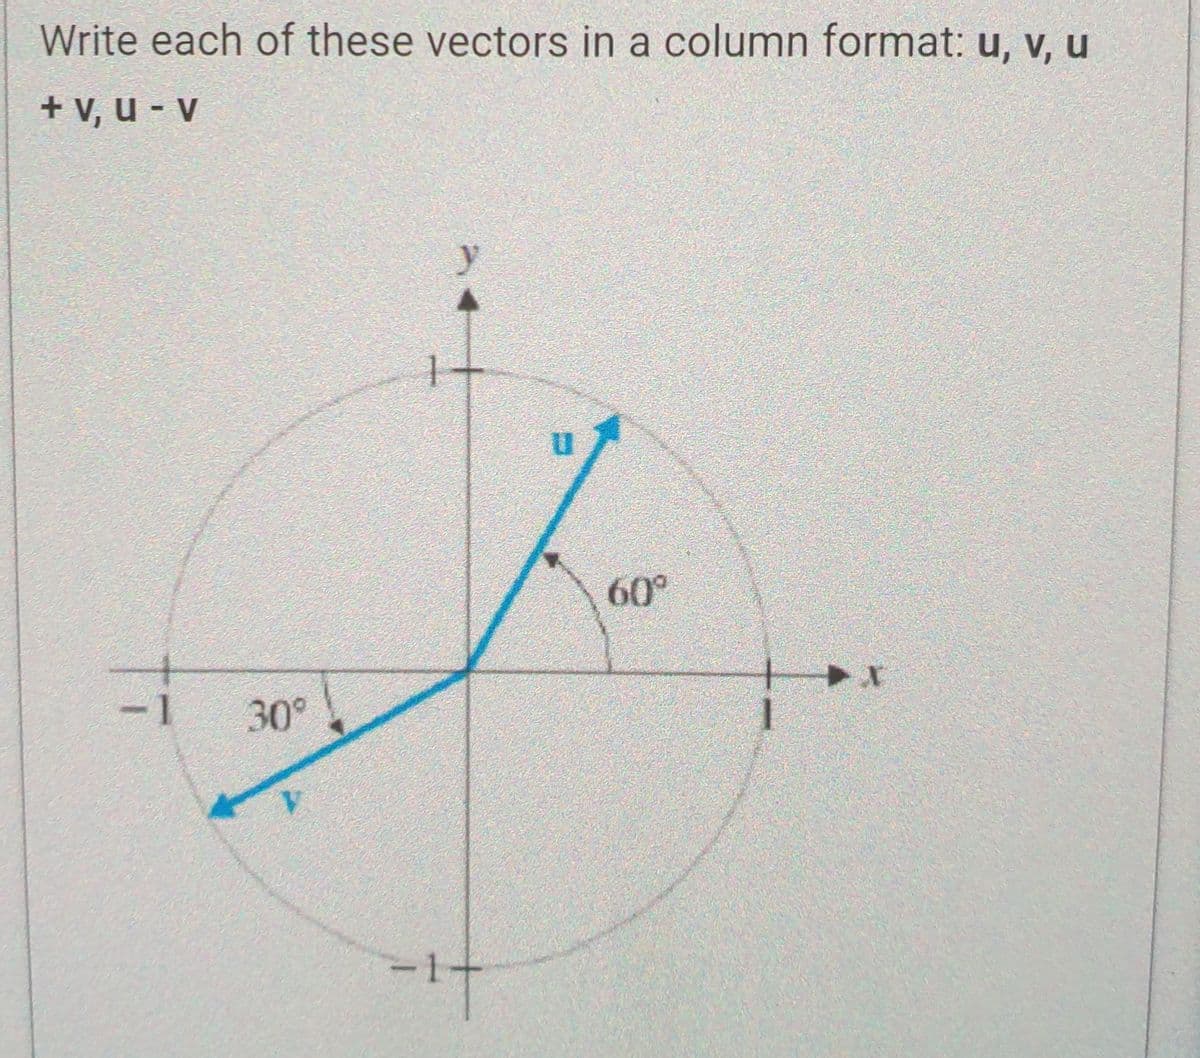 Write each of these vectors in a column format: u, v, u
+ V₁ U - V
<-1 30°
y
-17
60°